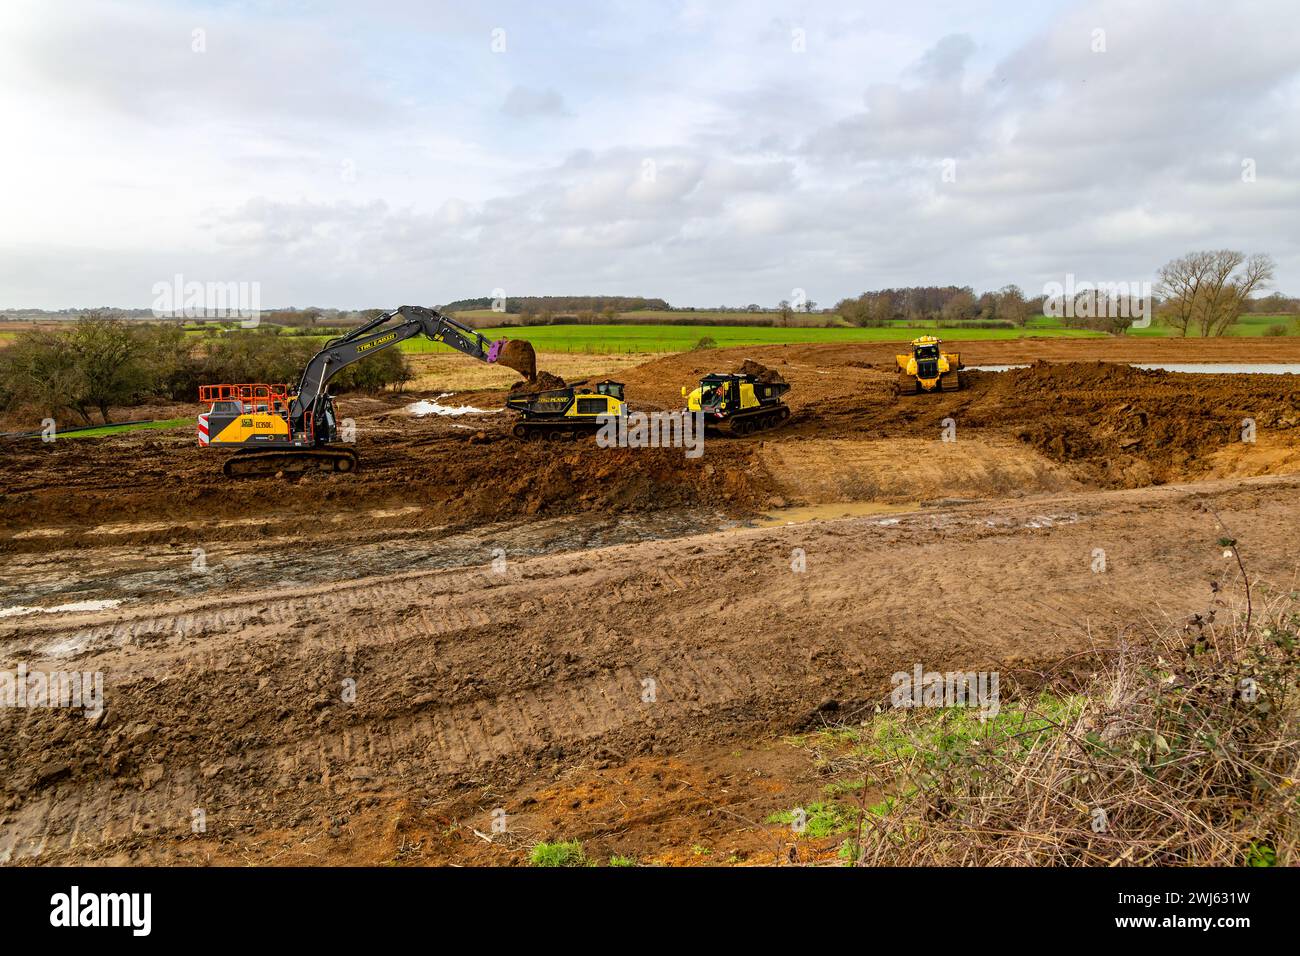 TRU PLANT hire heavy plant machinery constructing new reservoir, Shottisham, Suffolk, England, UK Stock Photo